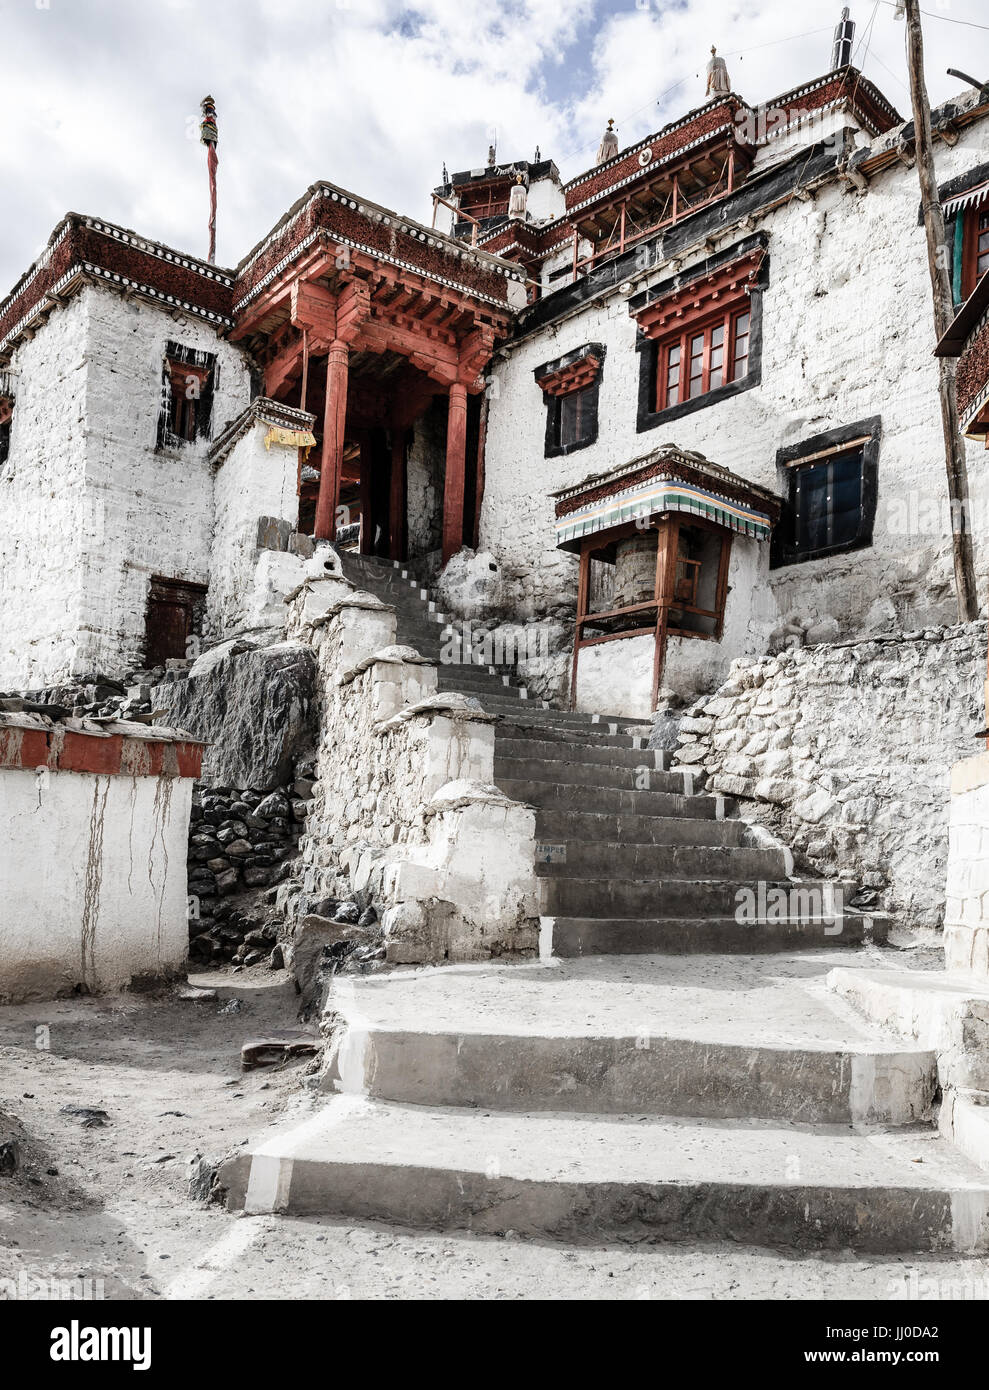 Diskit Buddhist Monastery in Nubra Valley in Kashmir, India Stock Photo